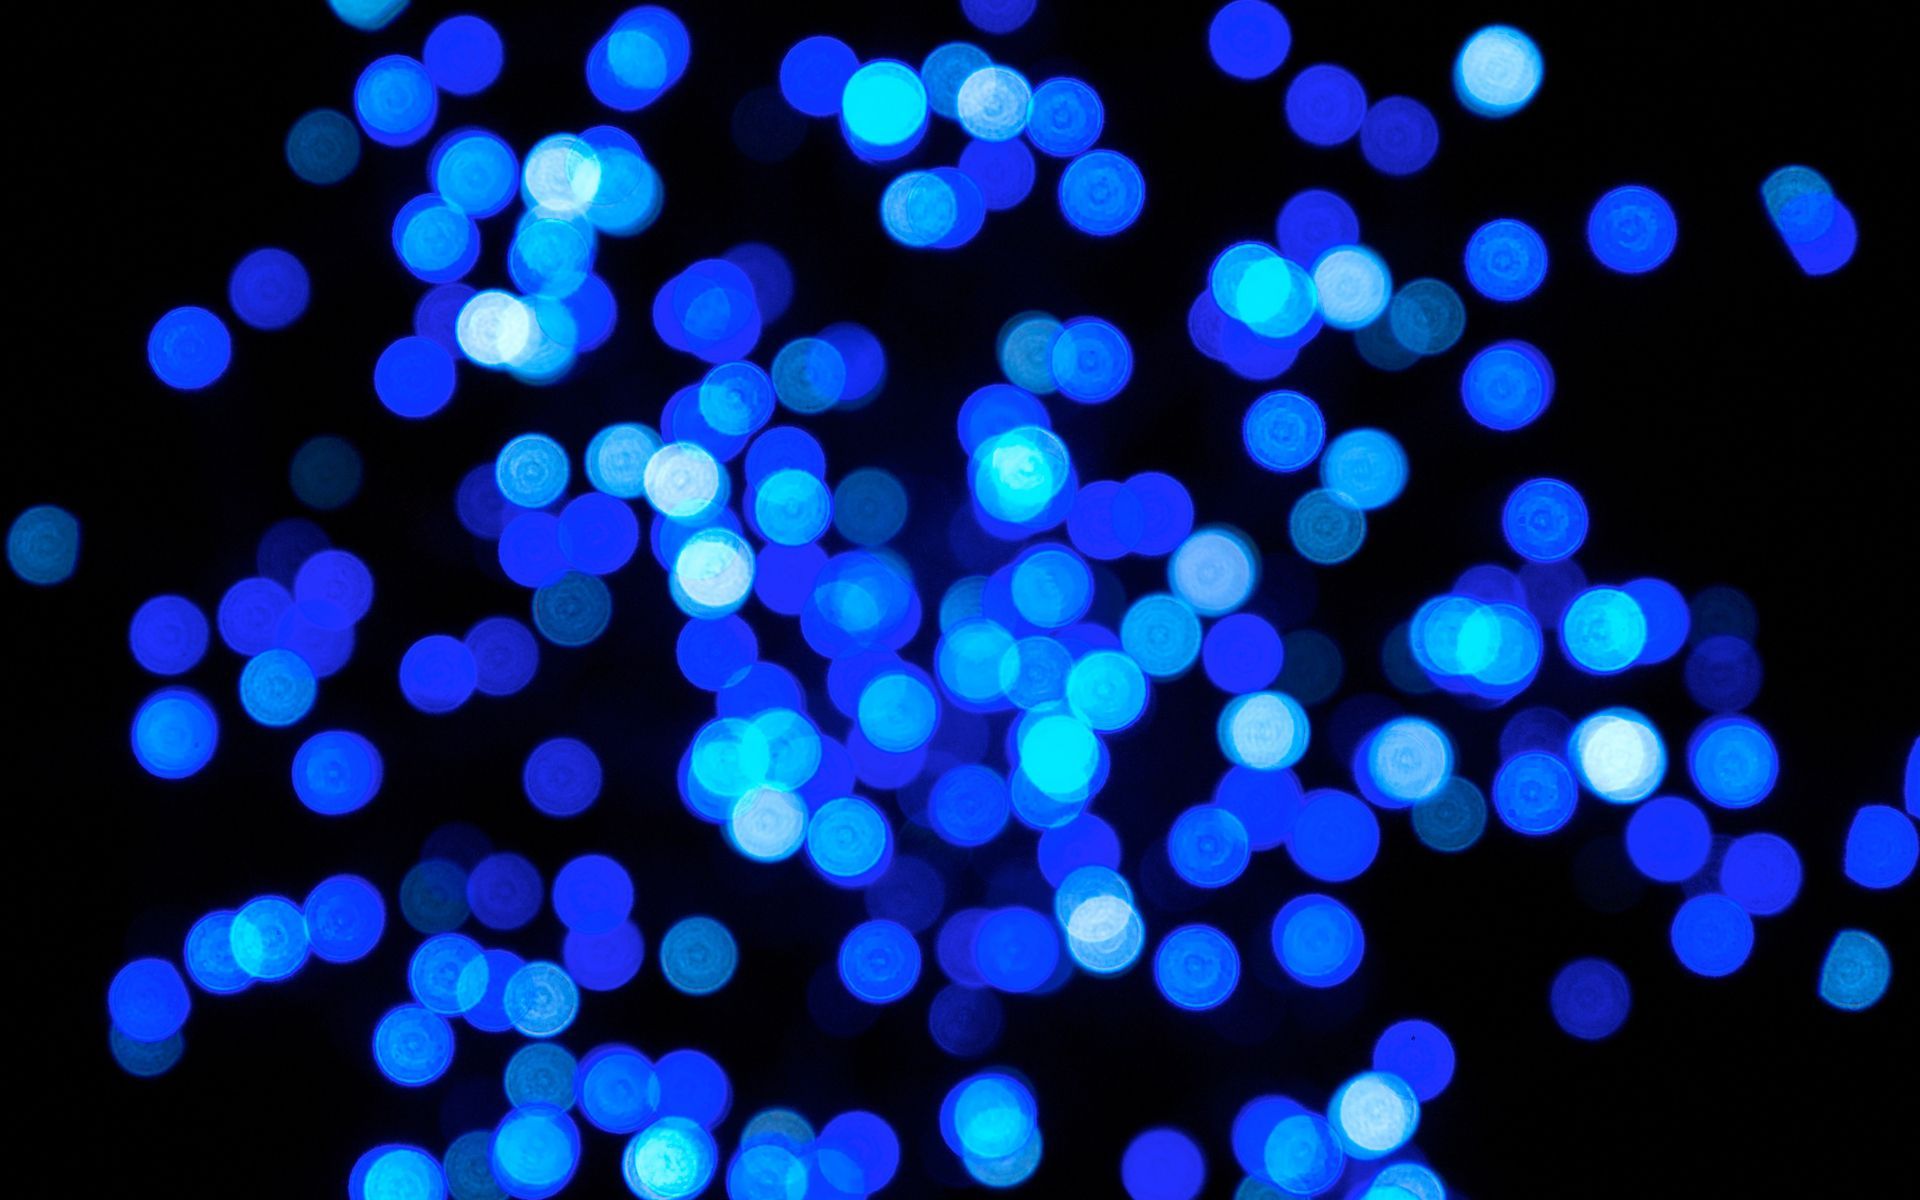 Blue Light Spots. Bubbles wallpaper, Lit wallpaper, Lights background